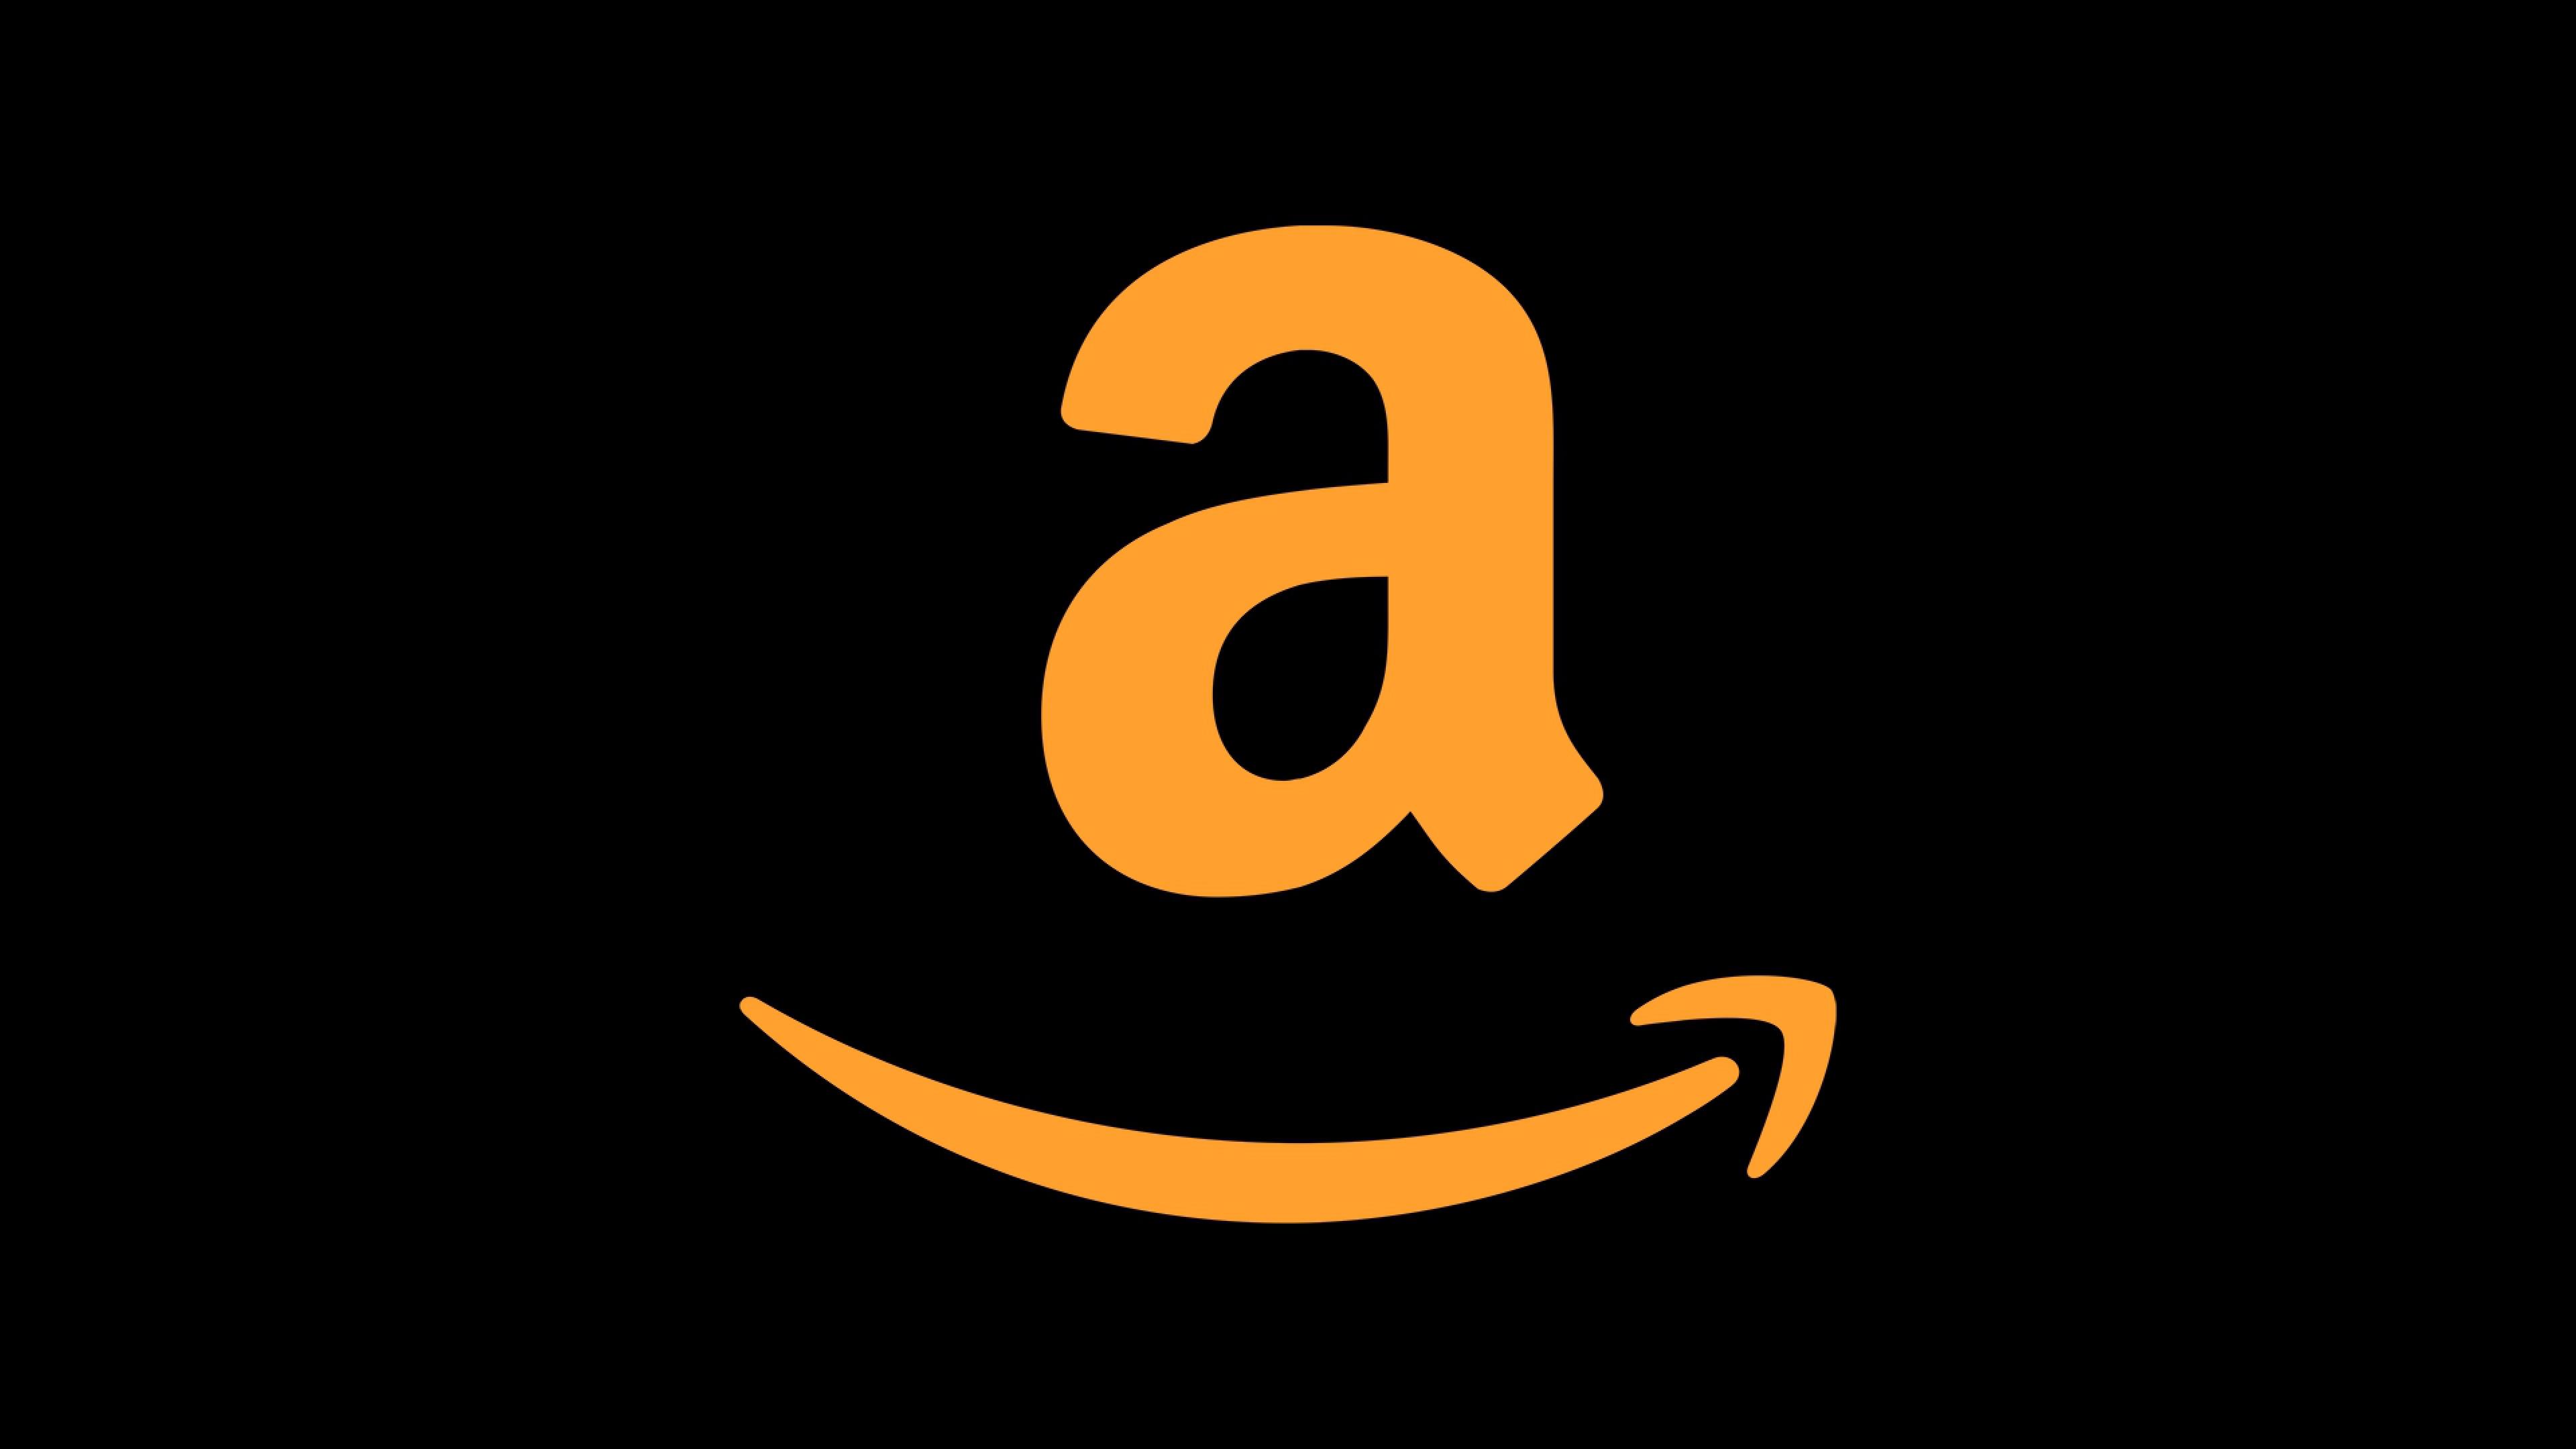 Amazon Logo - Amazon 4k Logo, HD Logo, 4k Wallpaper, Image, Background, Photo